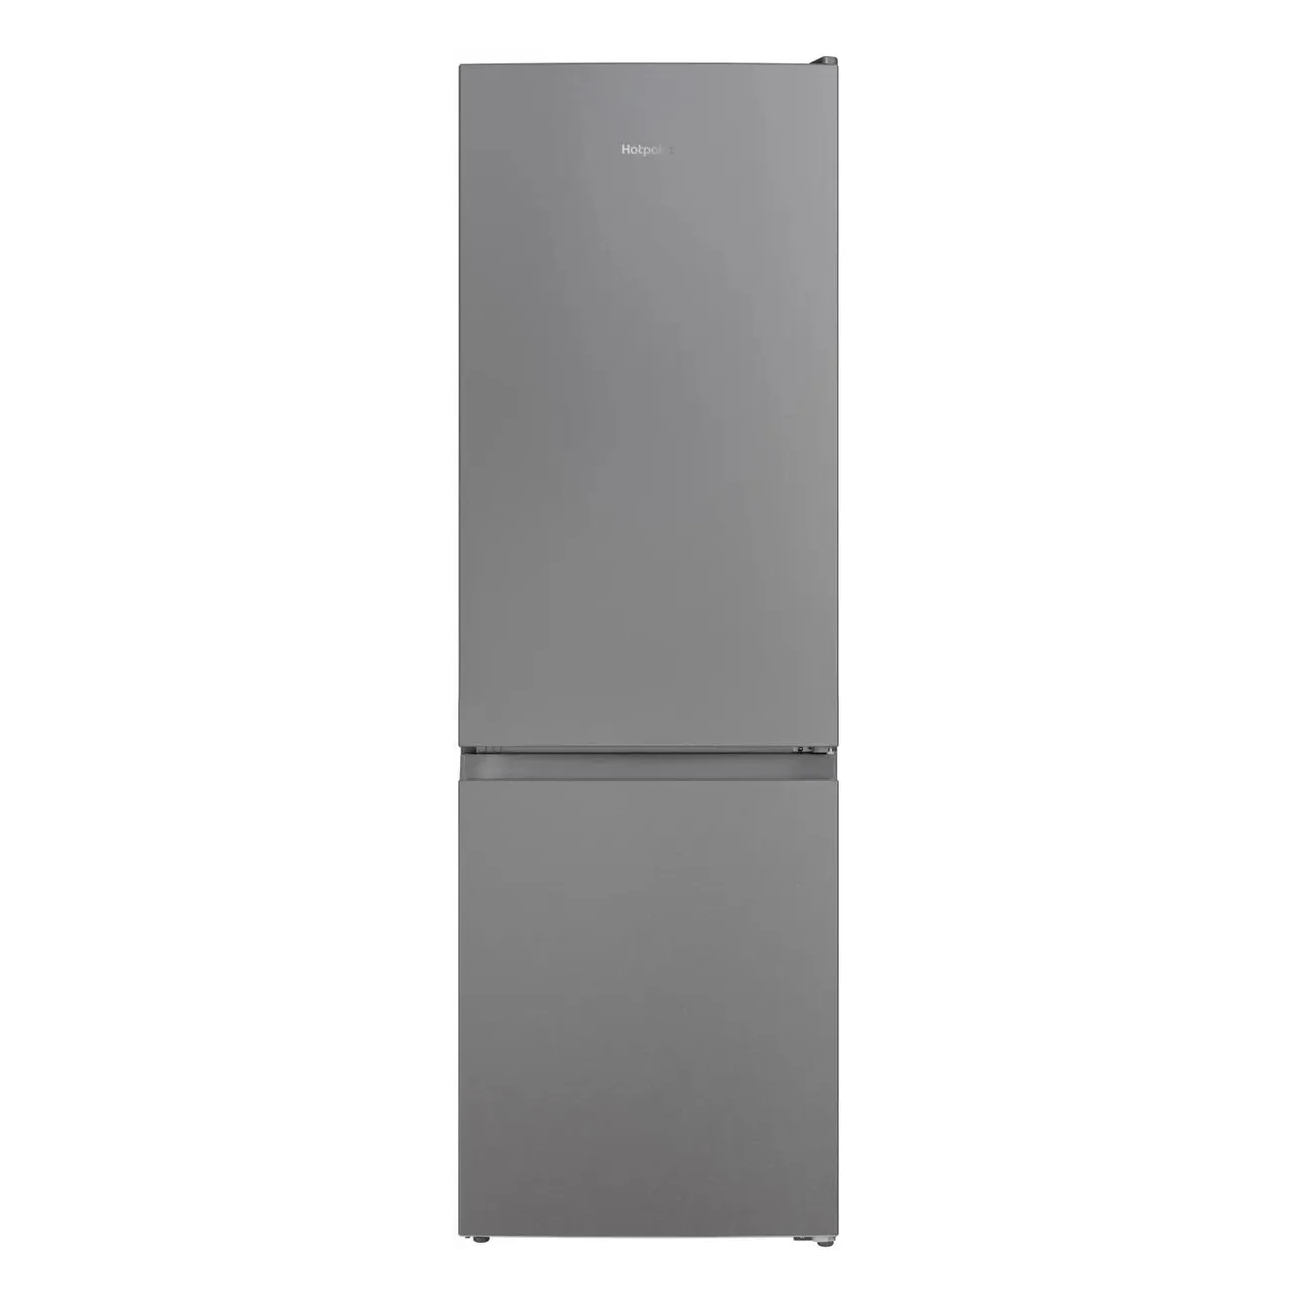 Холодильник HotPoint HT 4180 S серебристый двухкамерный холодильник hotpoint ht 4180 ab мраморный